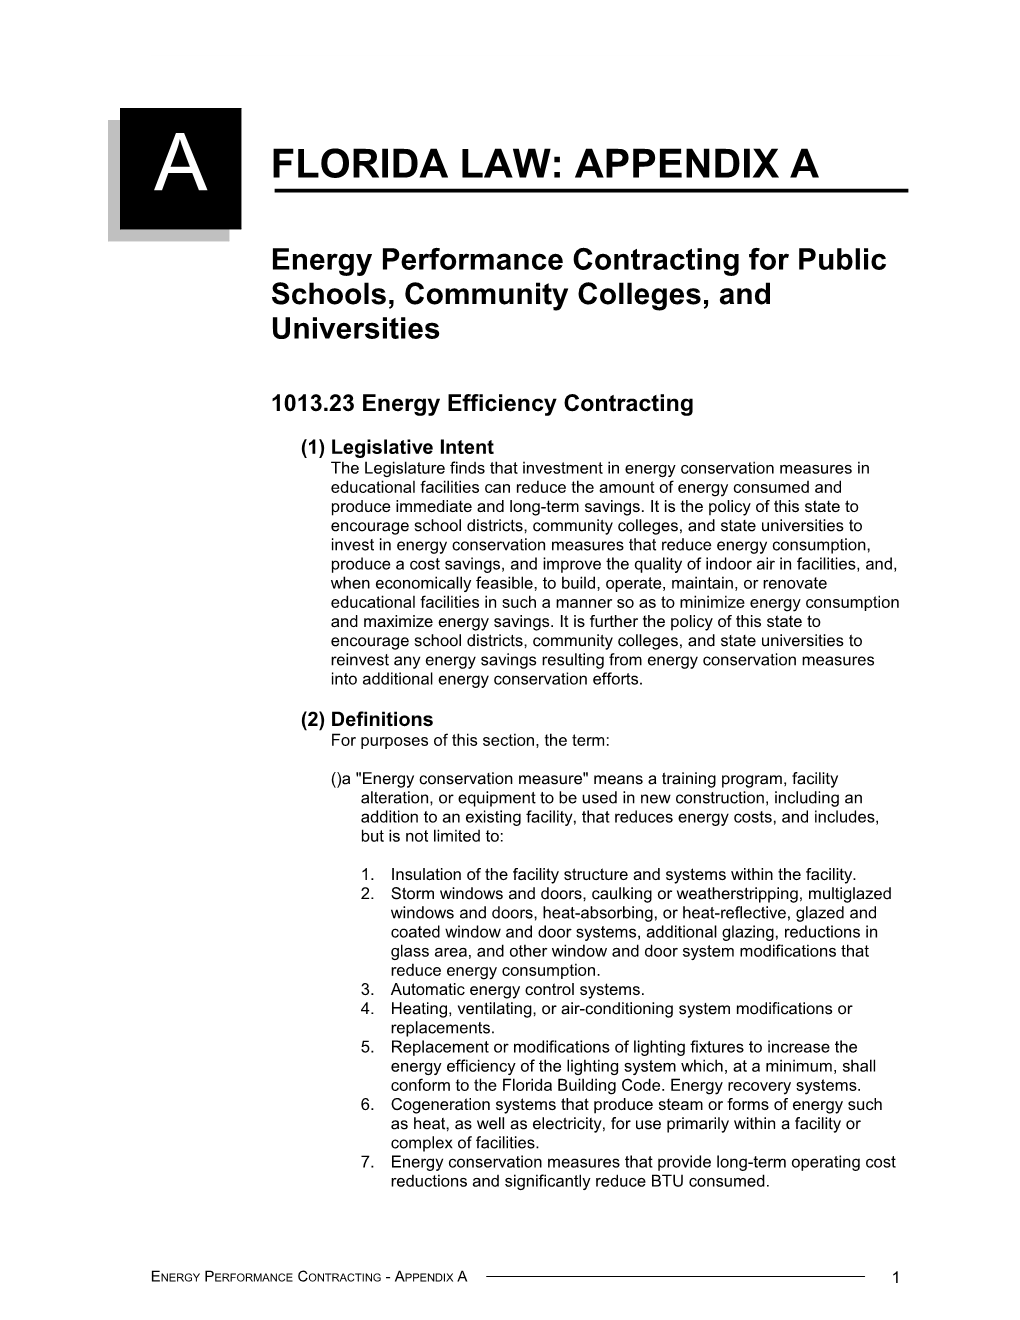 APPENDIX a Florida Statute 1013.23